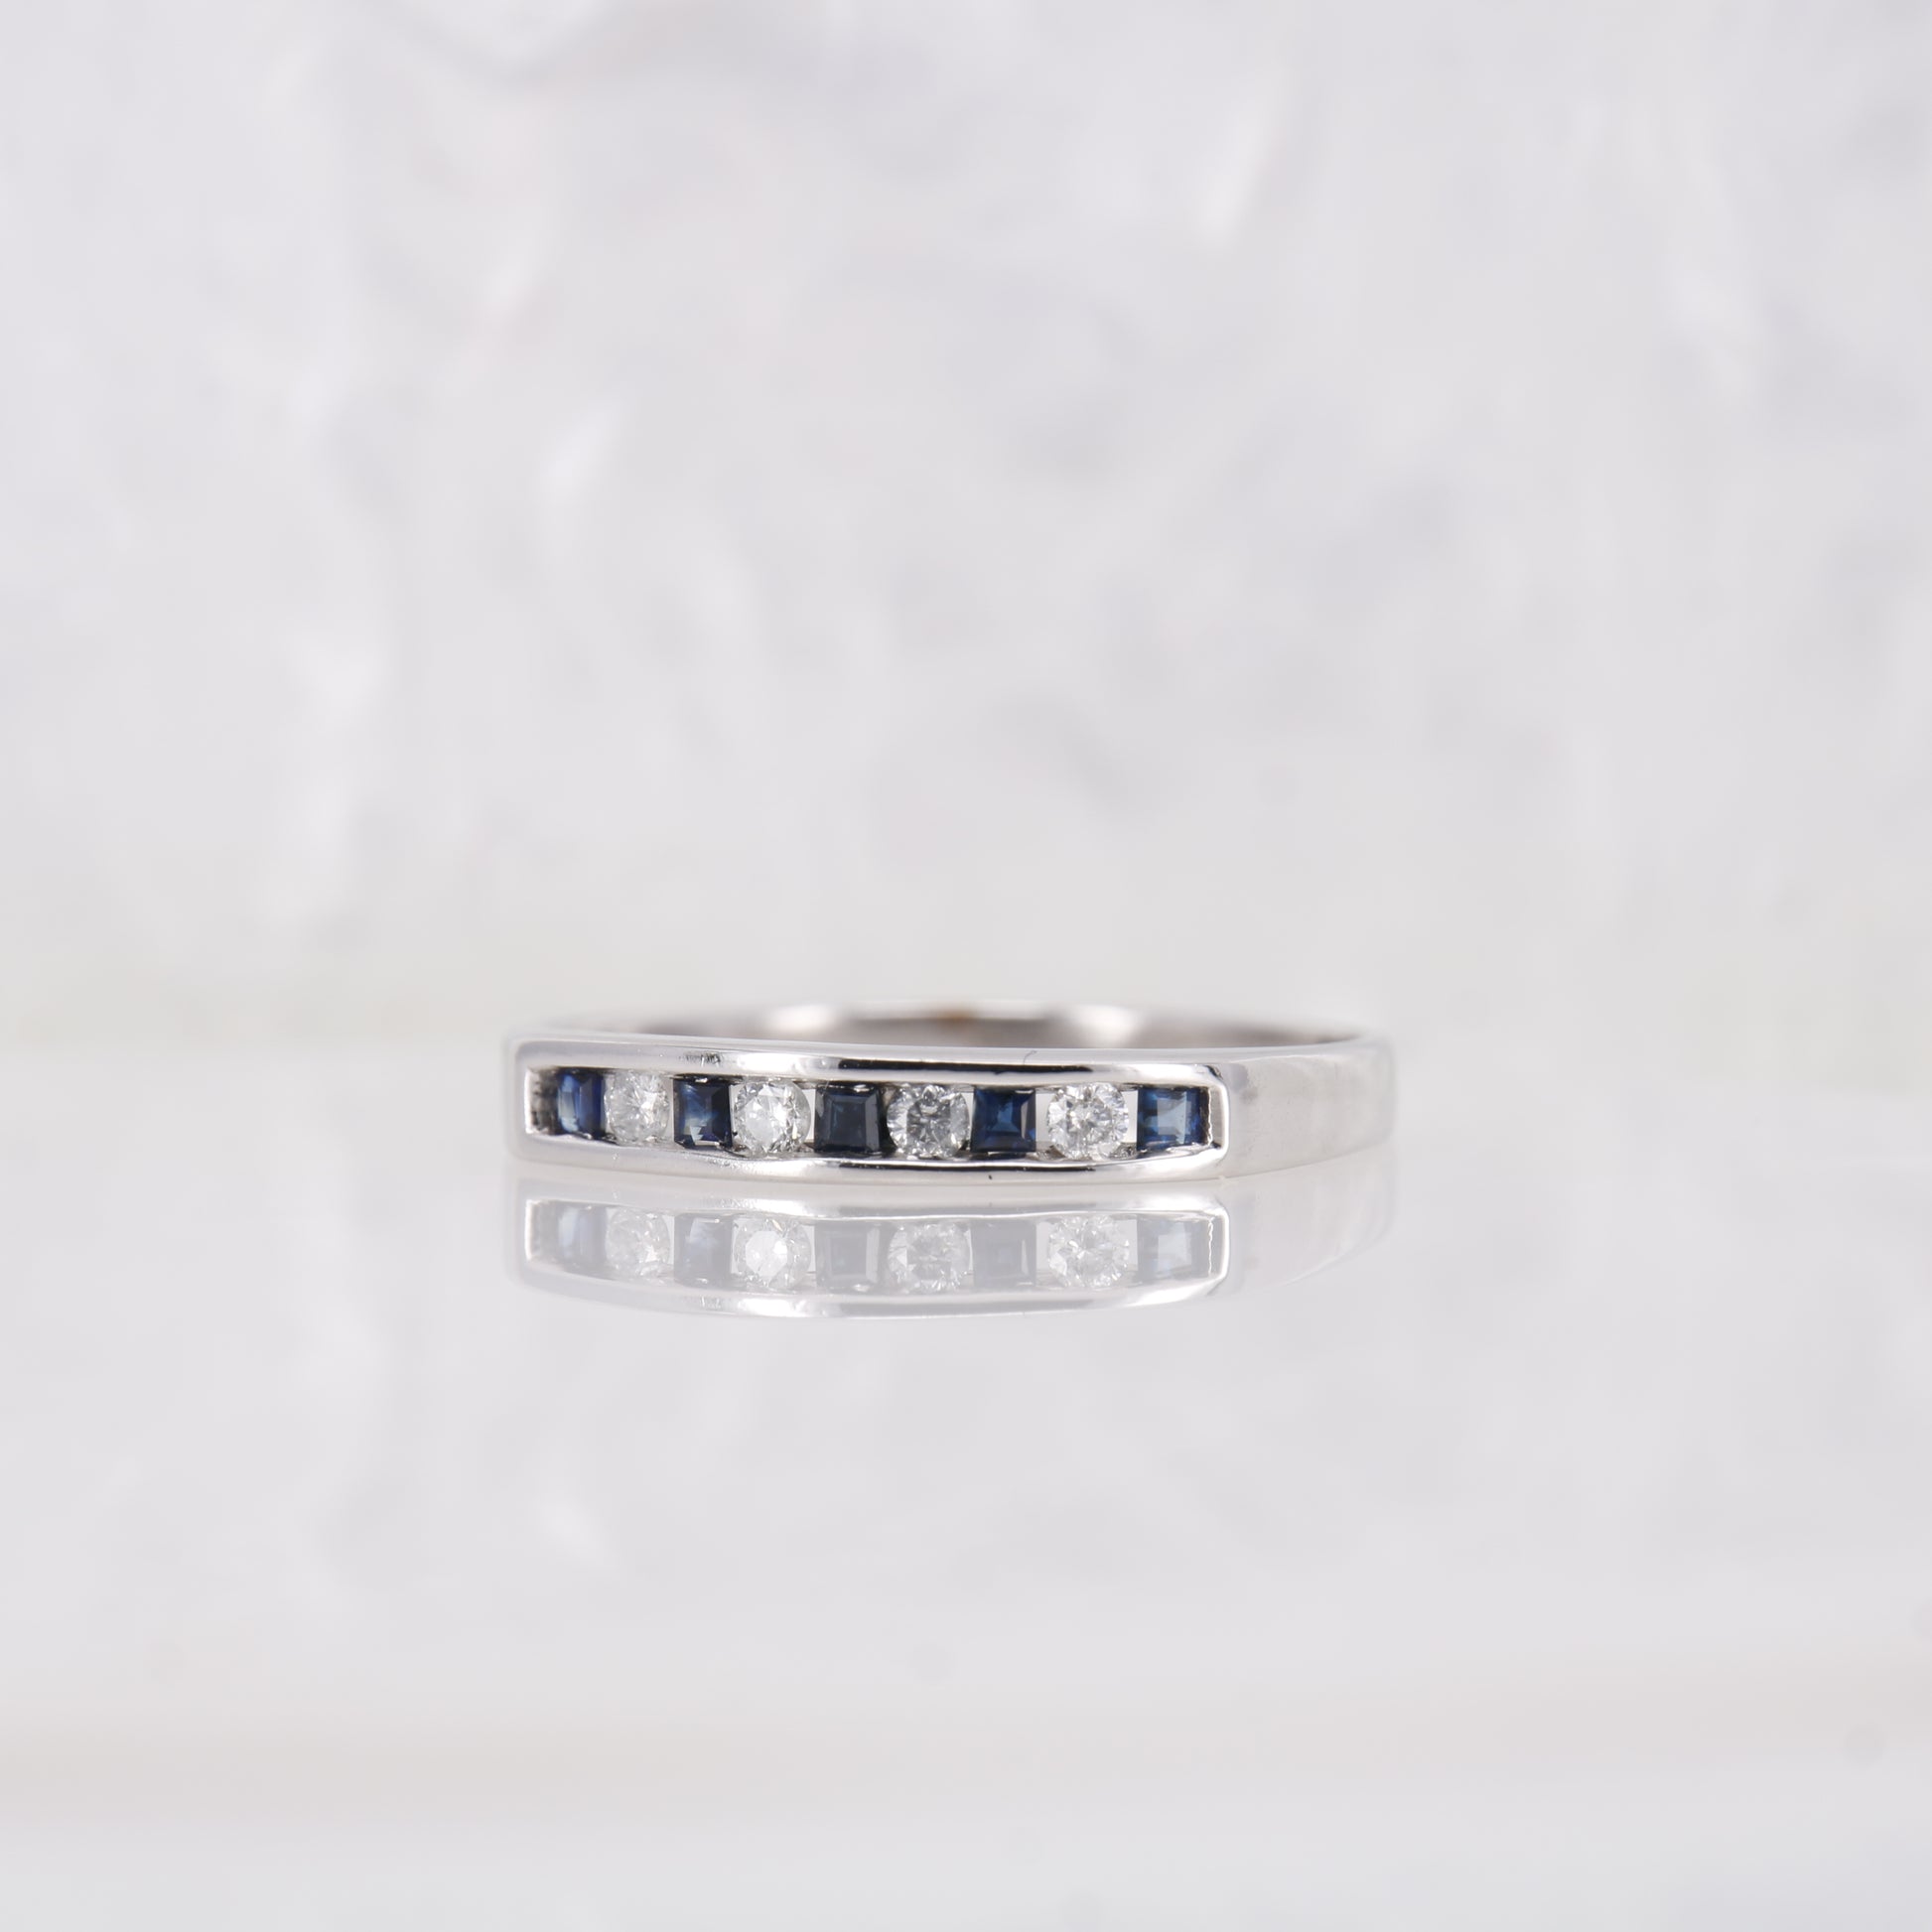 Vintage Secondhand Sapphire and Diamond Eternity Ring 9ct White Gold,9k Sapphire Diamond Wedding Band